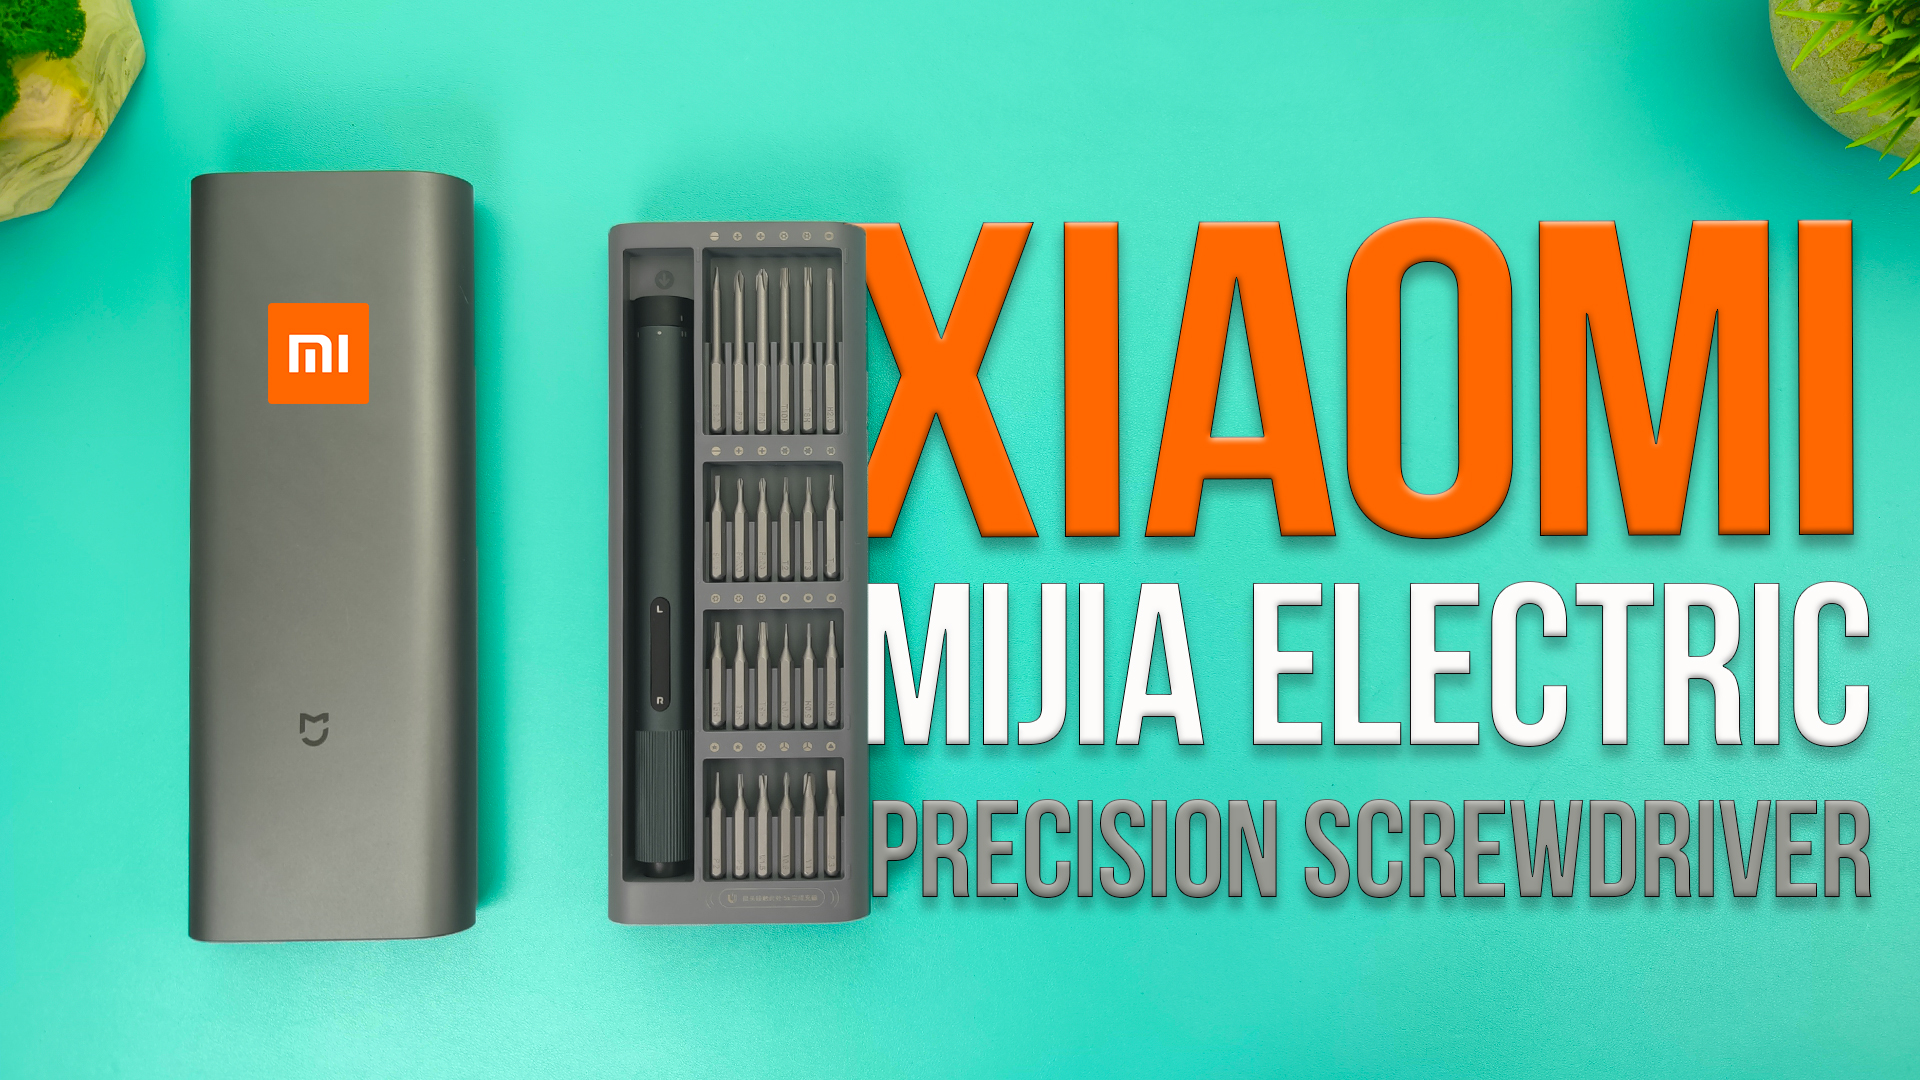 ТОПОВАЯ Аккумуляторная ОТВЕРТКА СЯОМИ - Xiaomi Mijia Electric Precision Screwdriver Kit 24 in 1